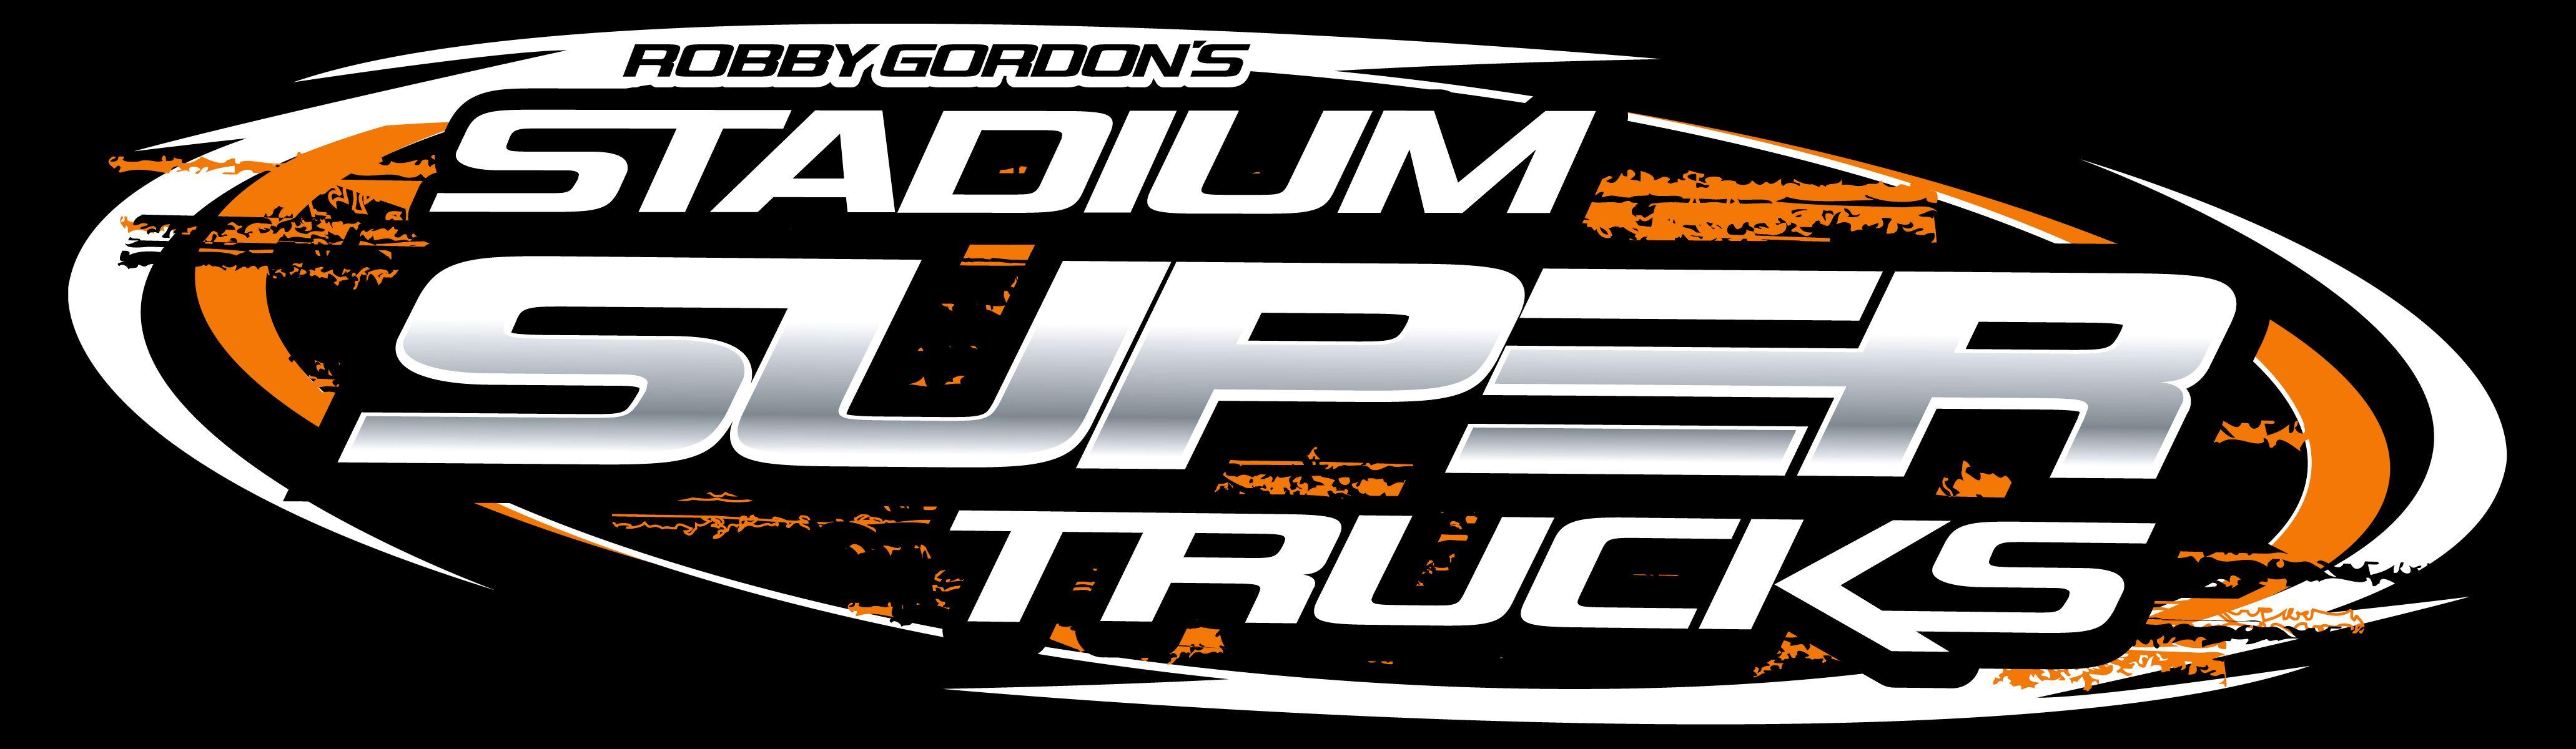 Off-Road Racing Logo - RobbyGordon.com GORDON ANNOUNCES NEW OFF ROAD RACING